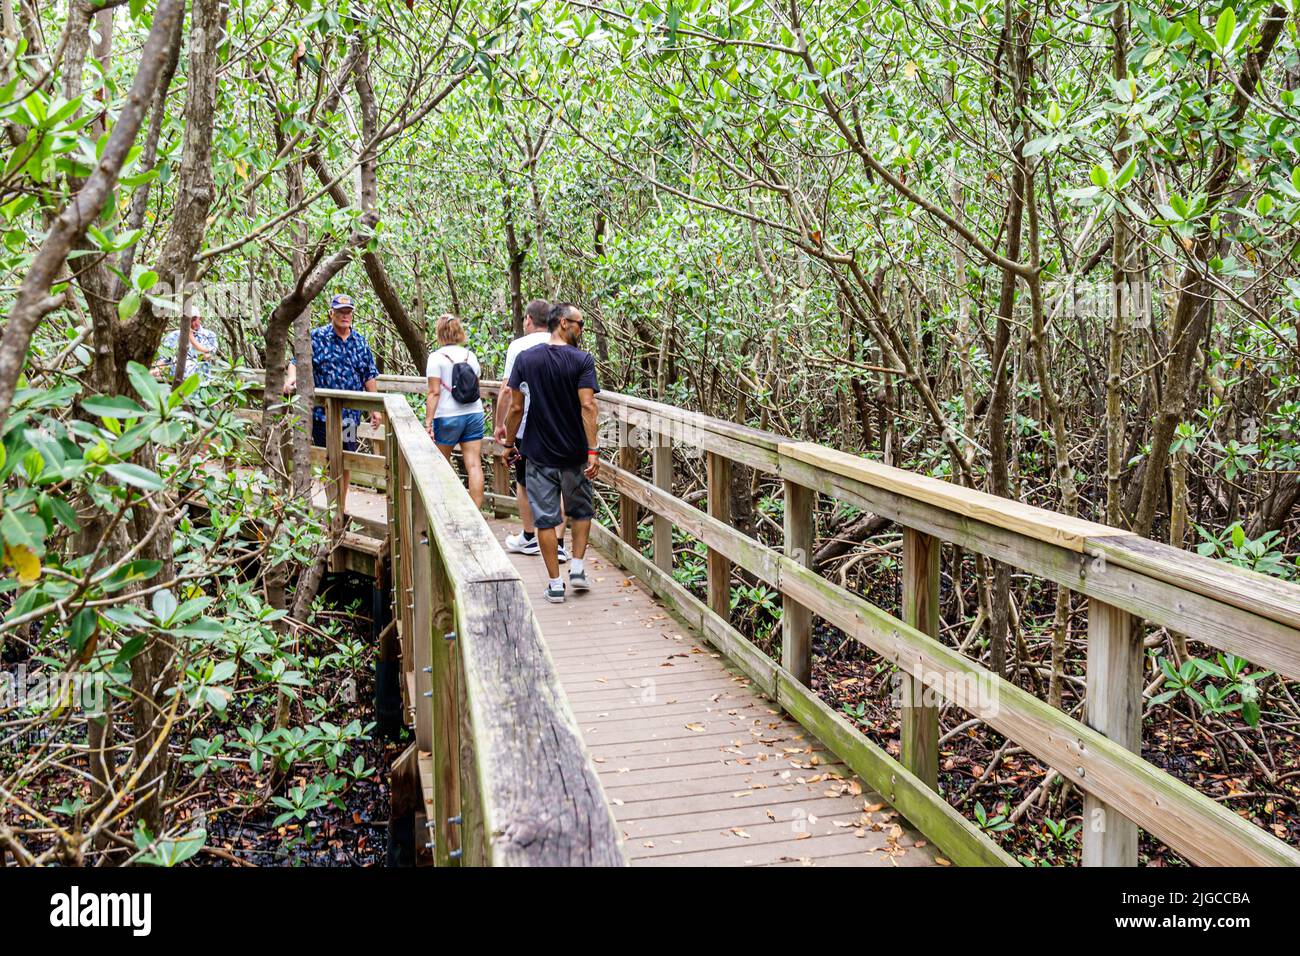 Punta Gorda Florida,Charlotte Harbor Ponce de Leon Park raised boardwalk nature trail path people exploring walking on Stock Photo